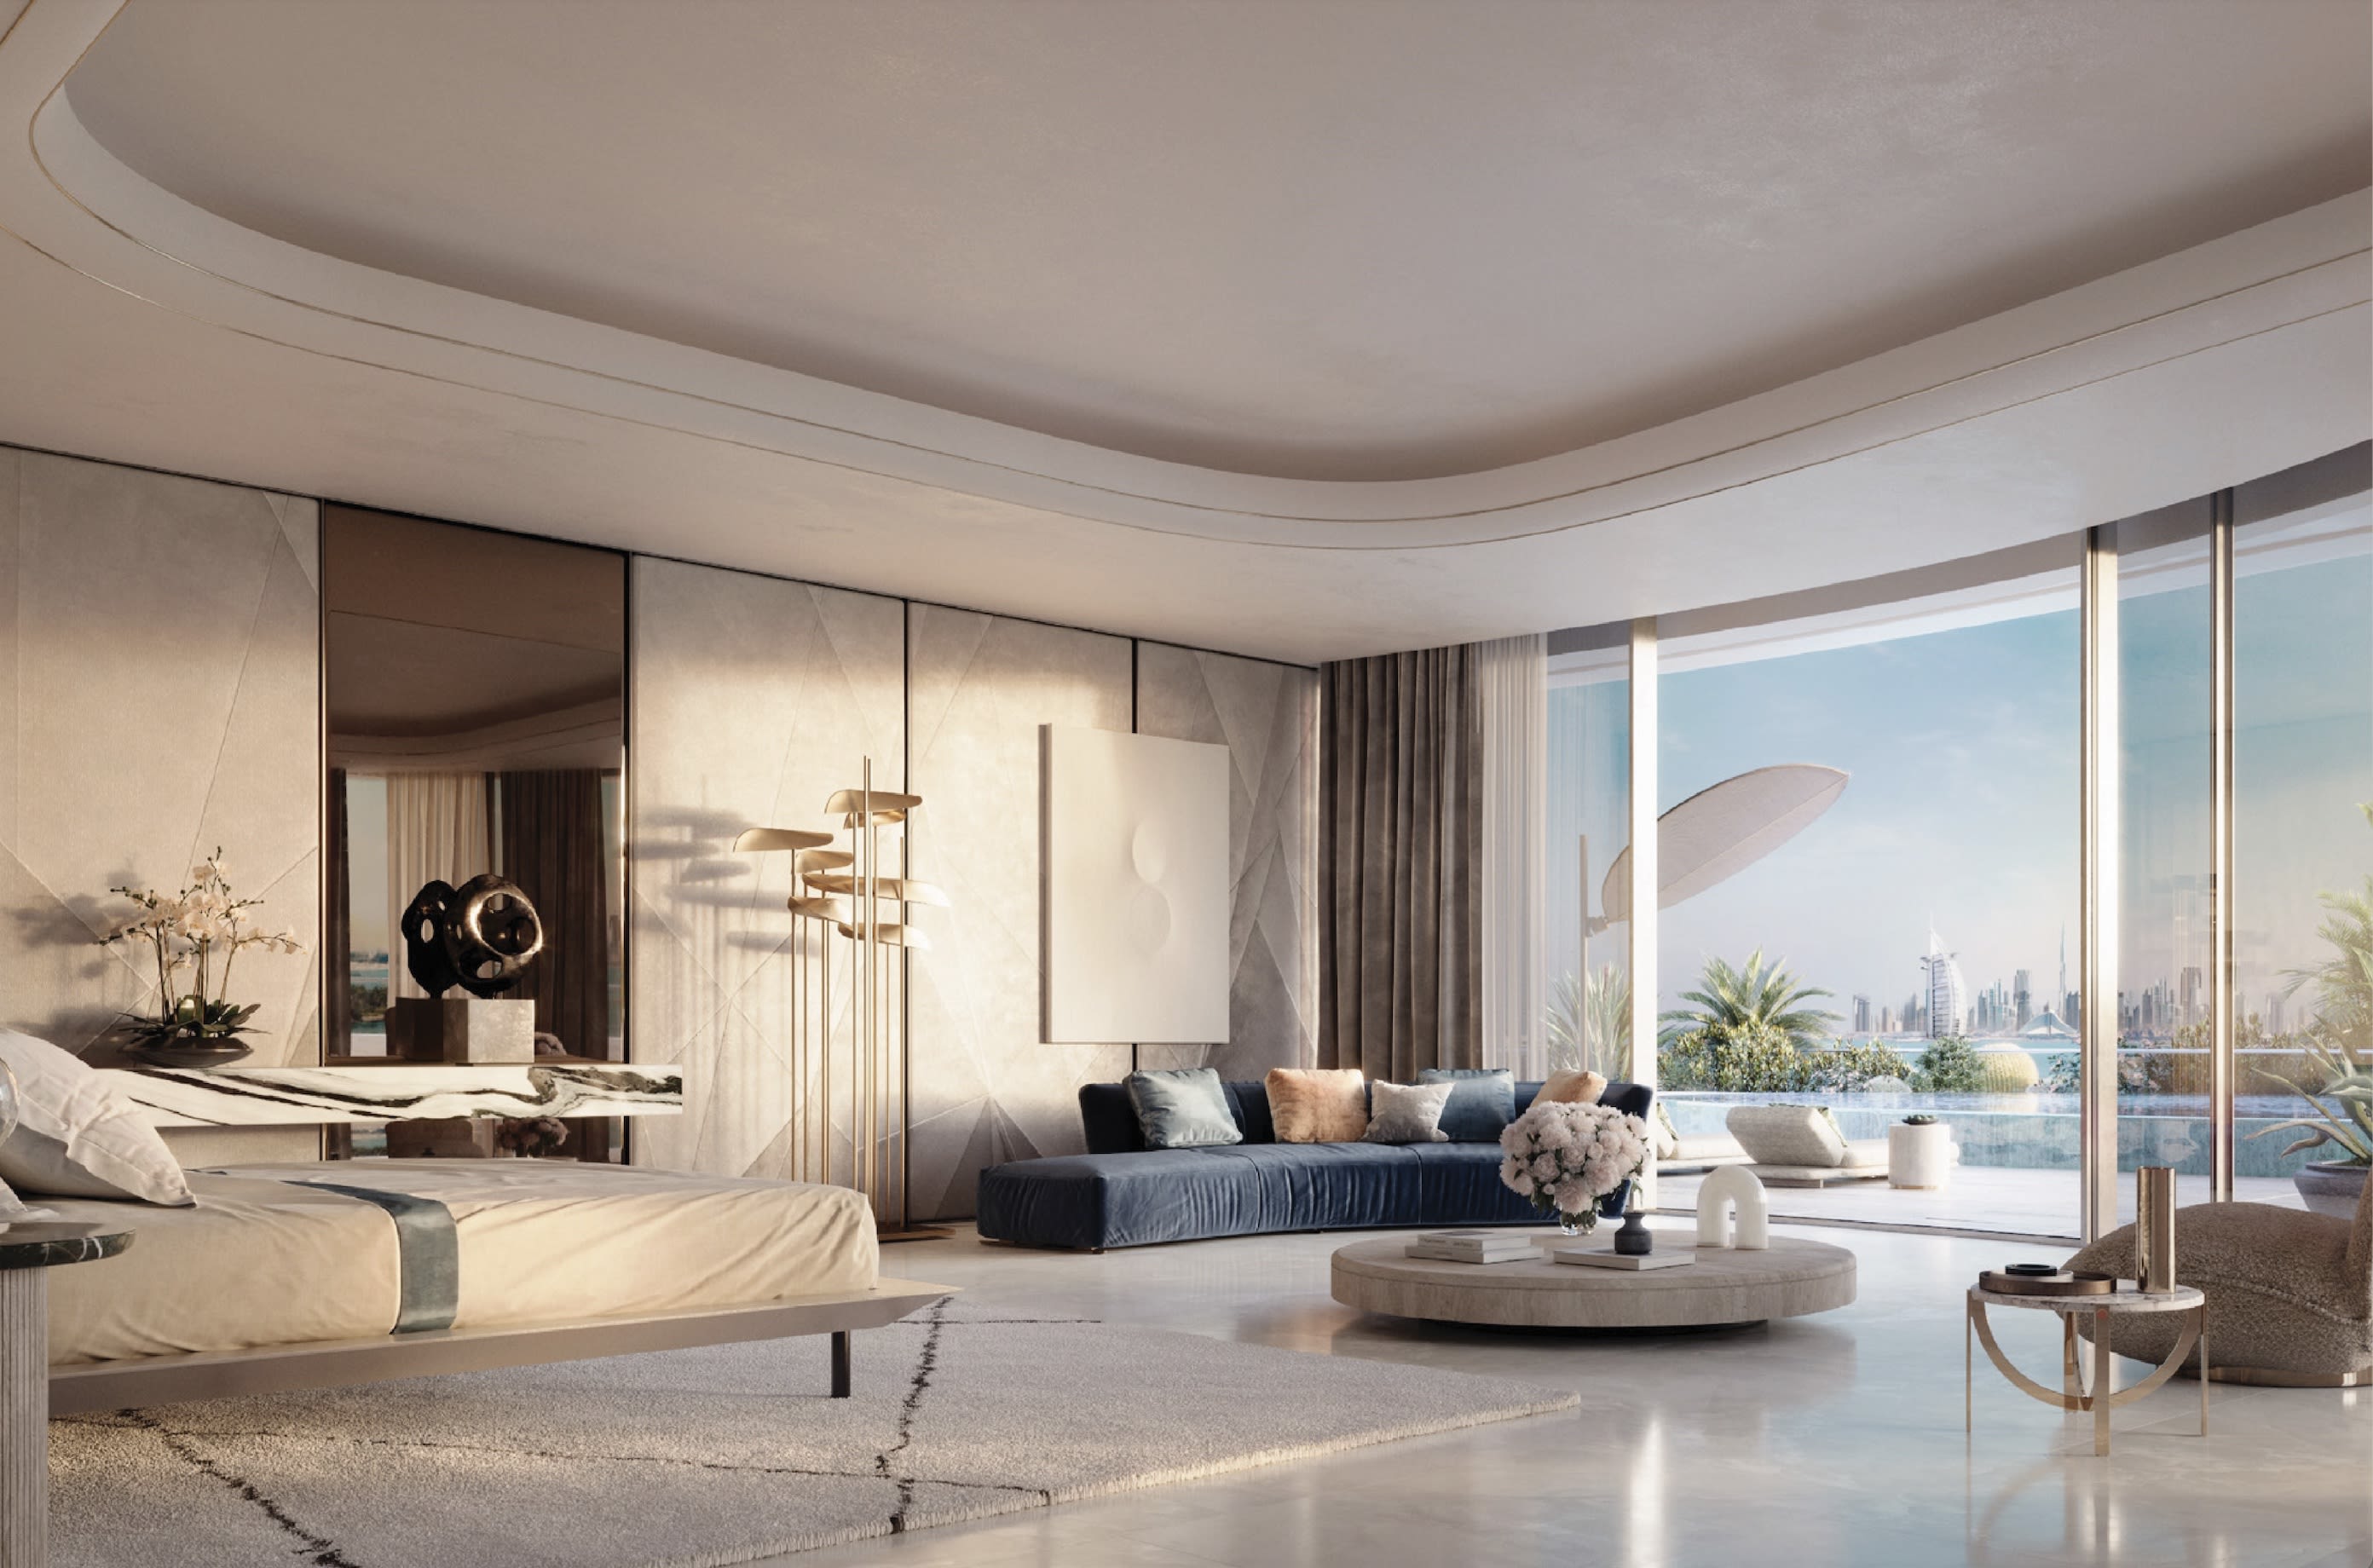 Dubai penthouse sells for record $20 million   CNN